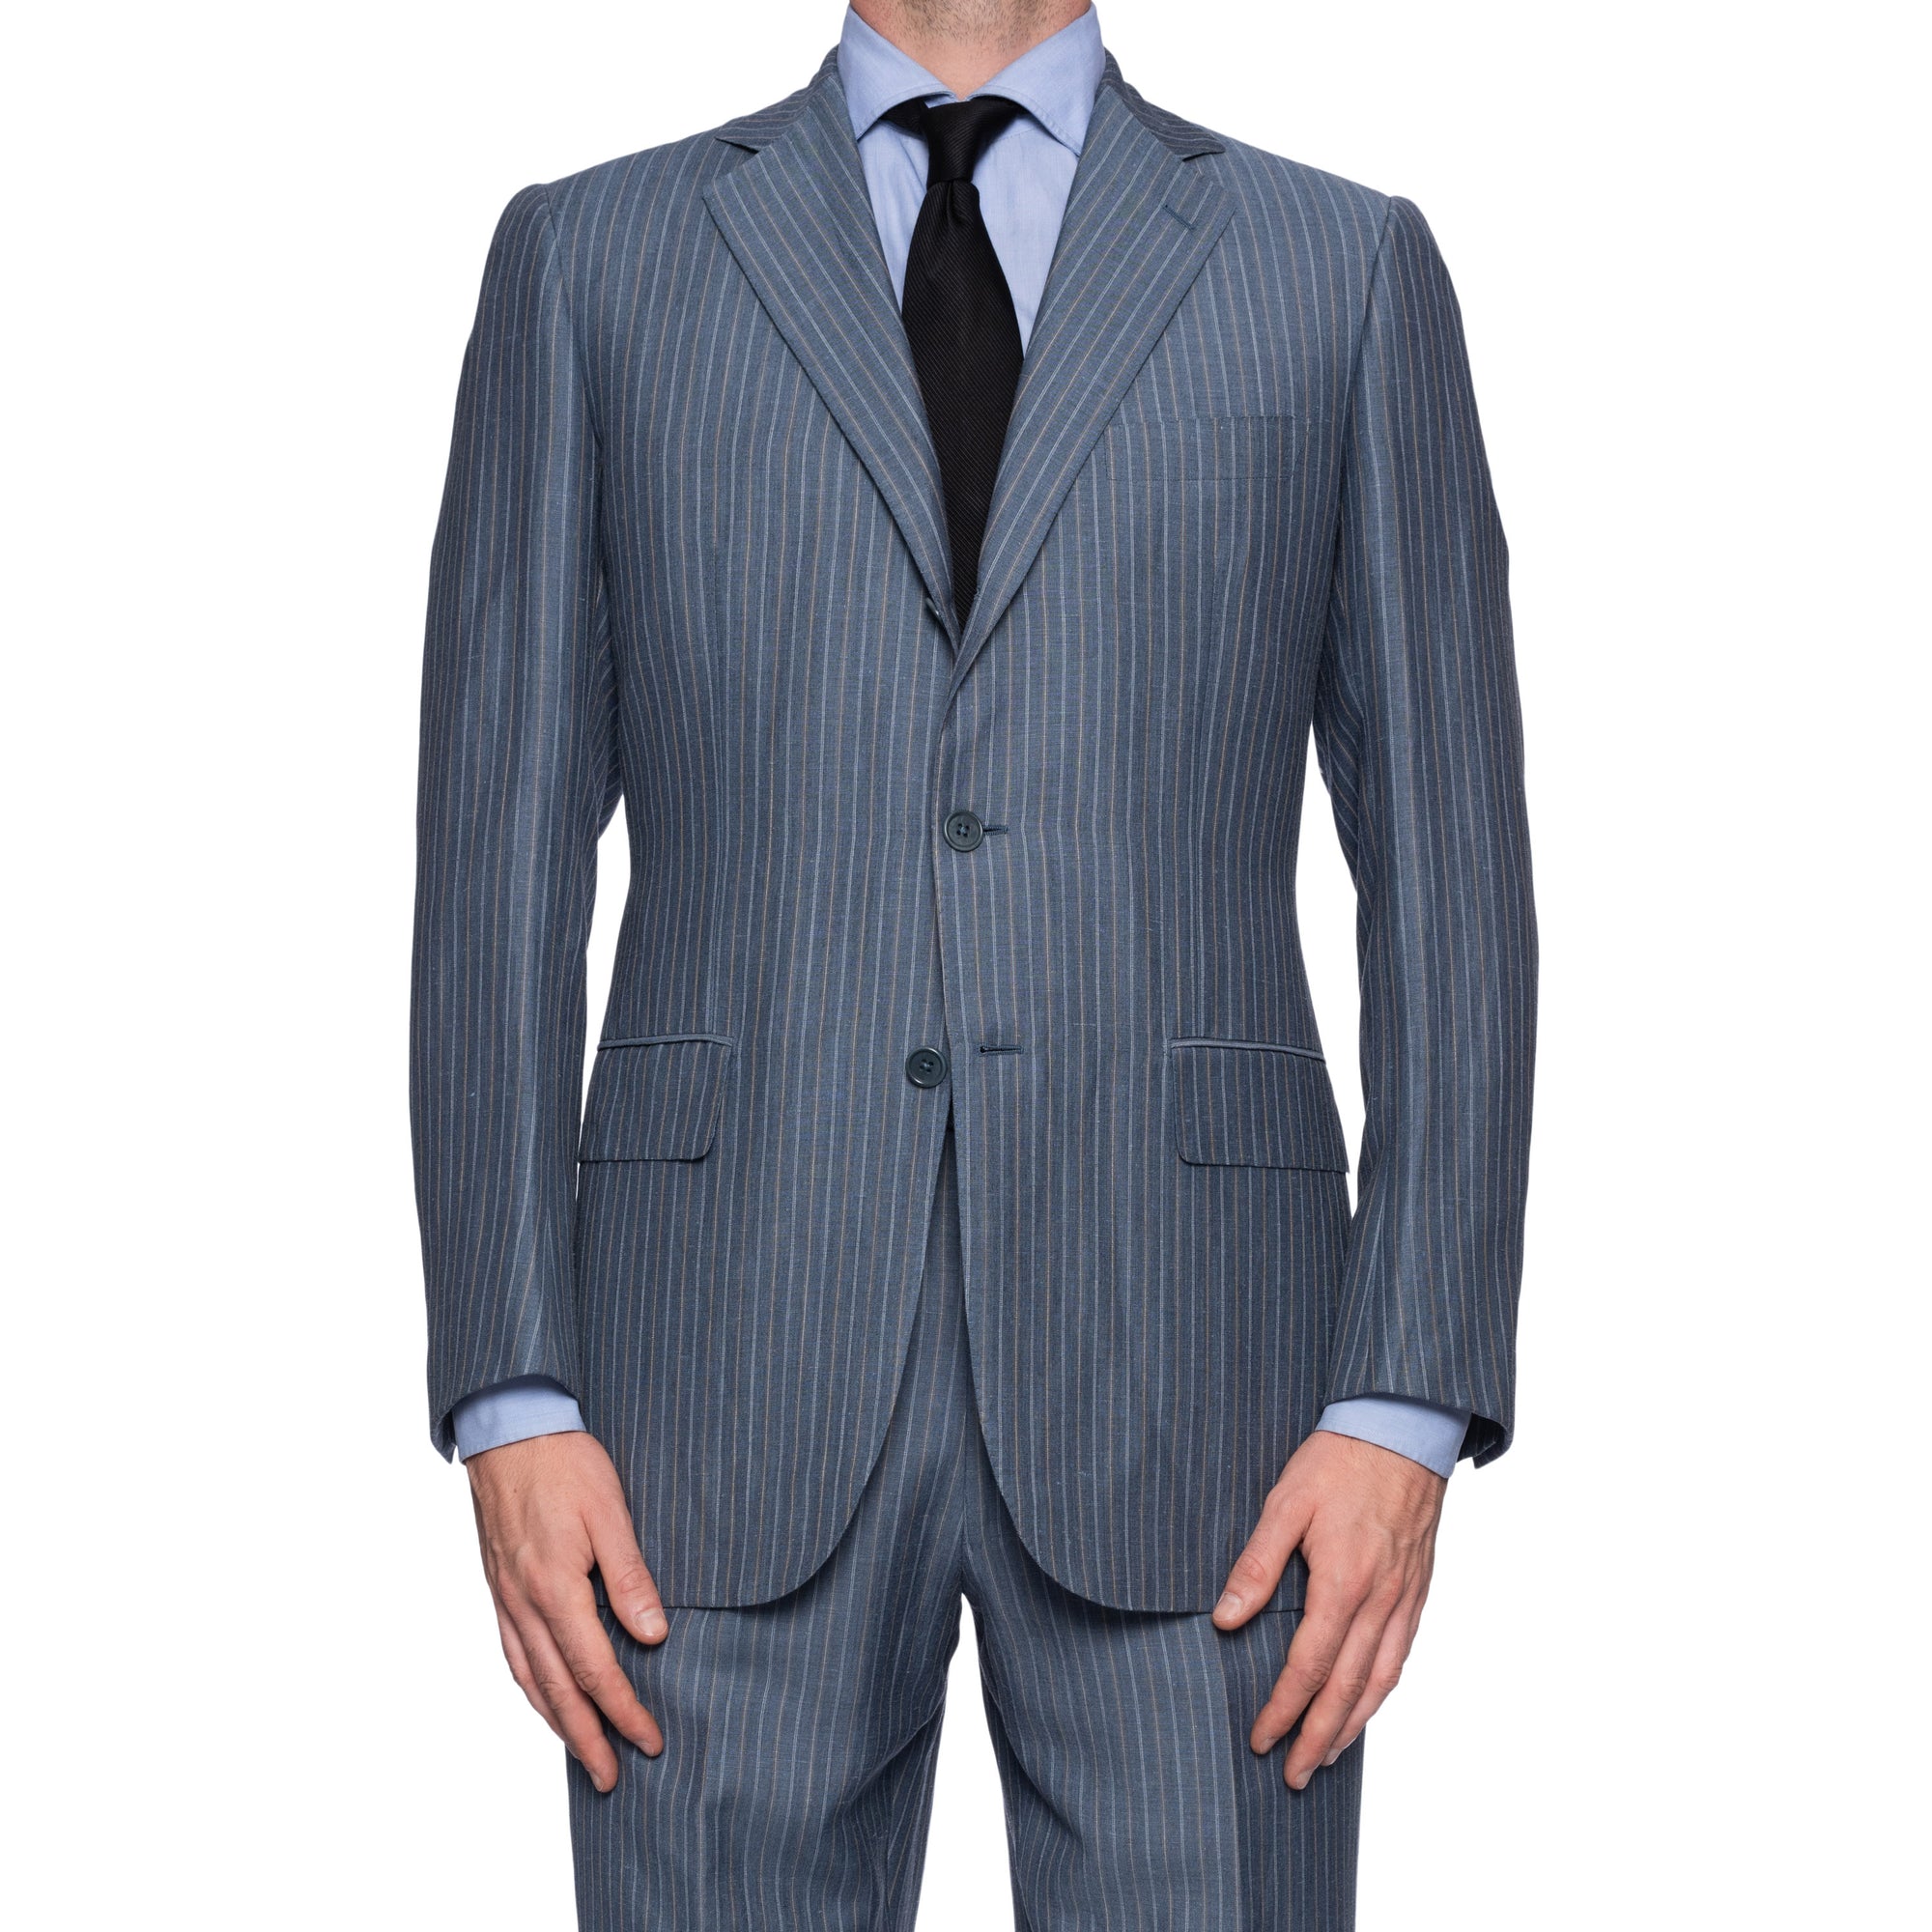 SARTORIA CASTANGIA HandMade Steel Blue Striped Wool-Linen Suit NEW